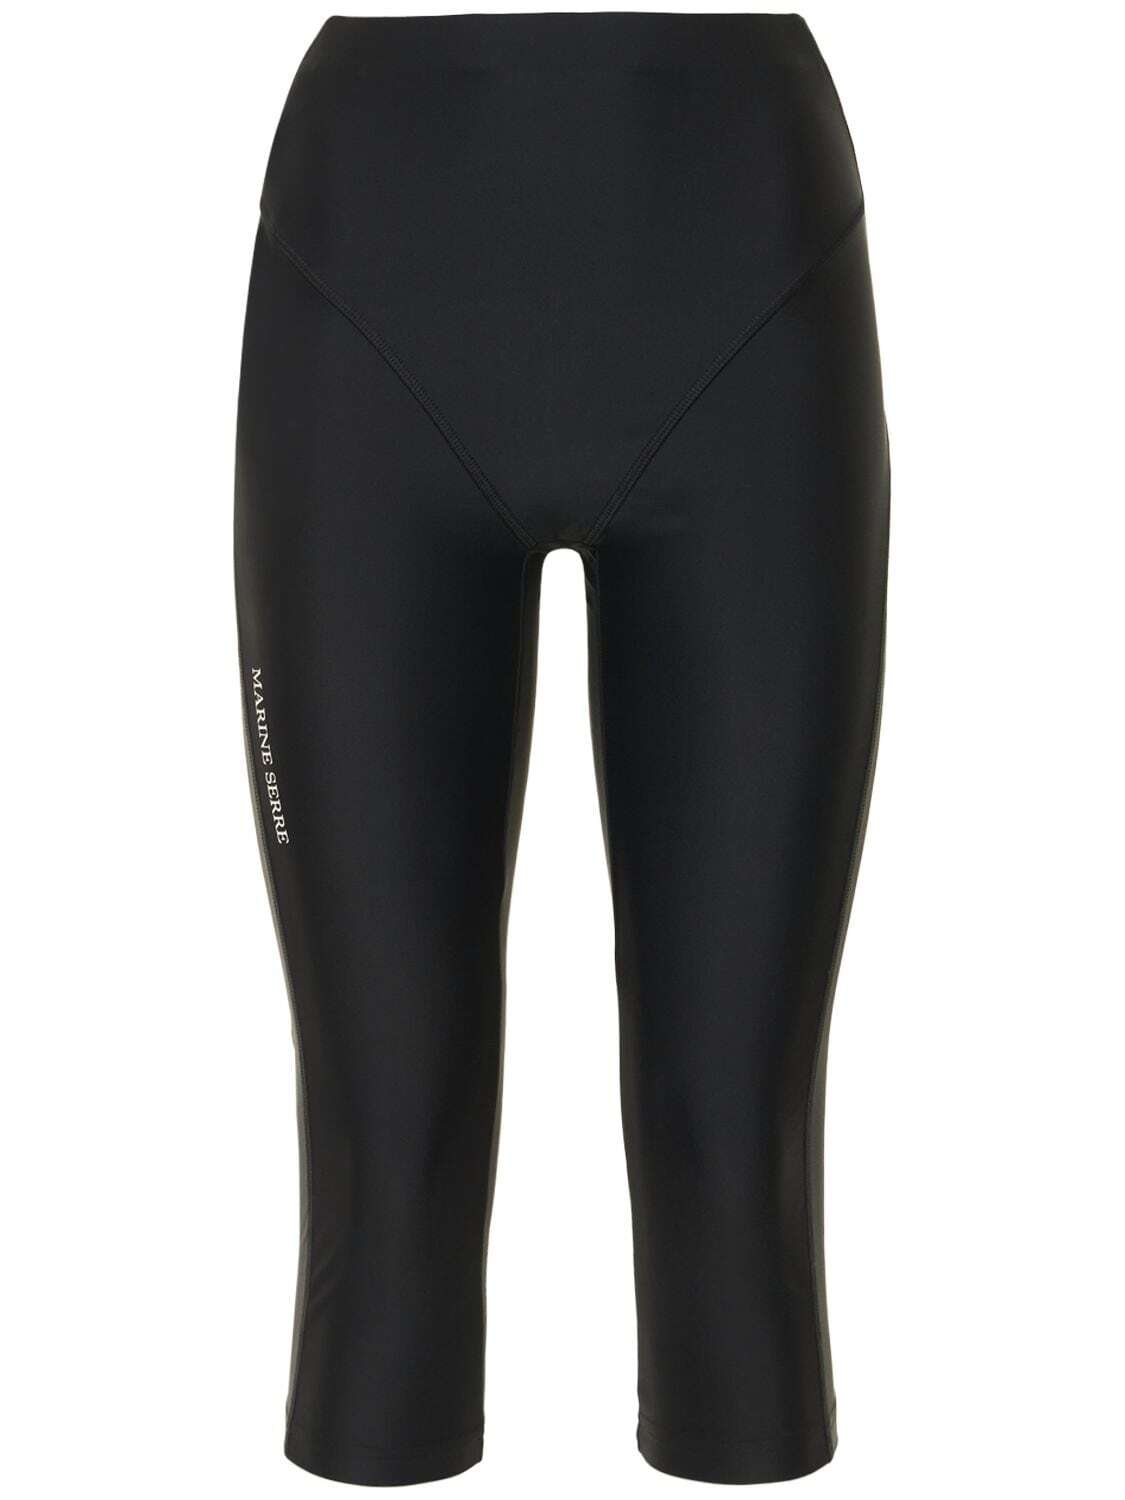 MARINE SERRE Stretch Tech Training Shorts in black